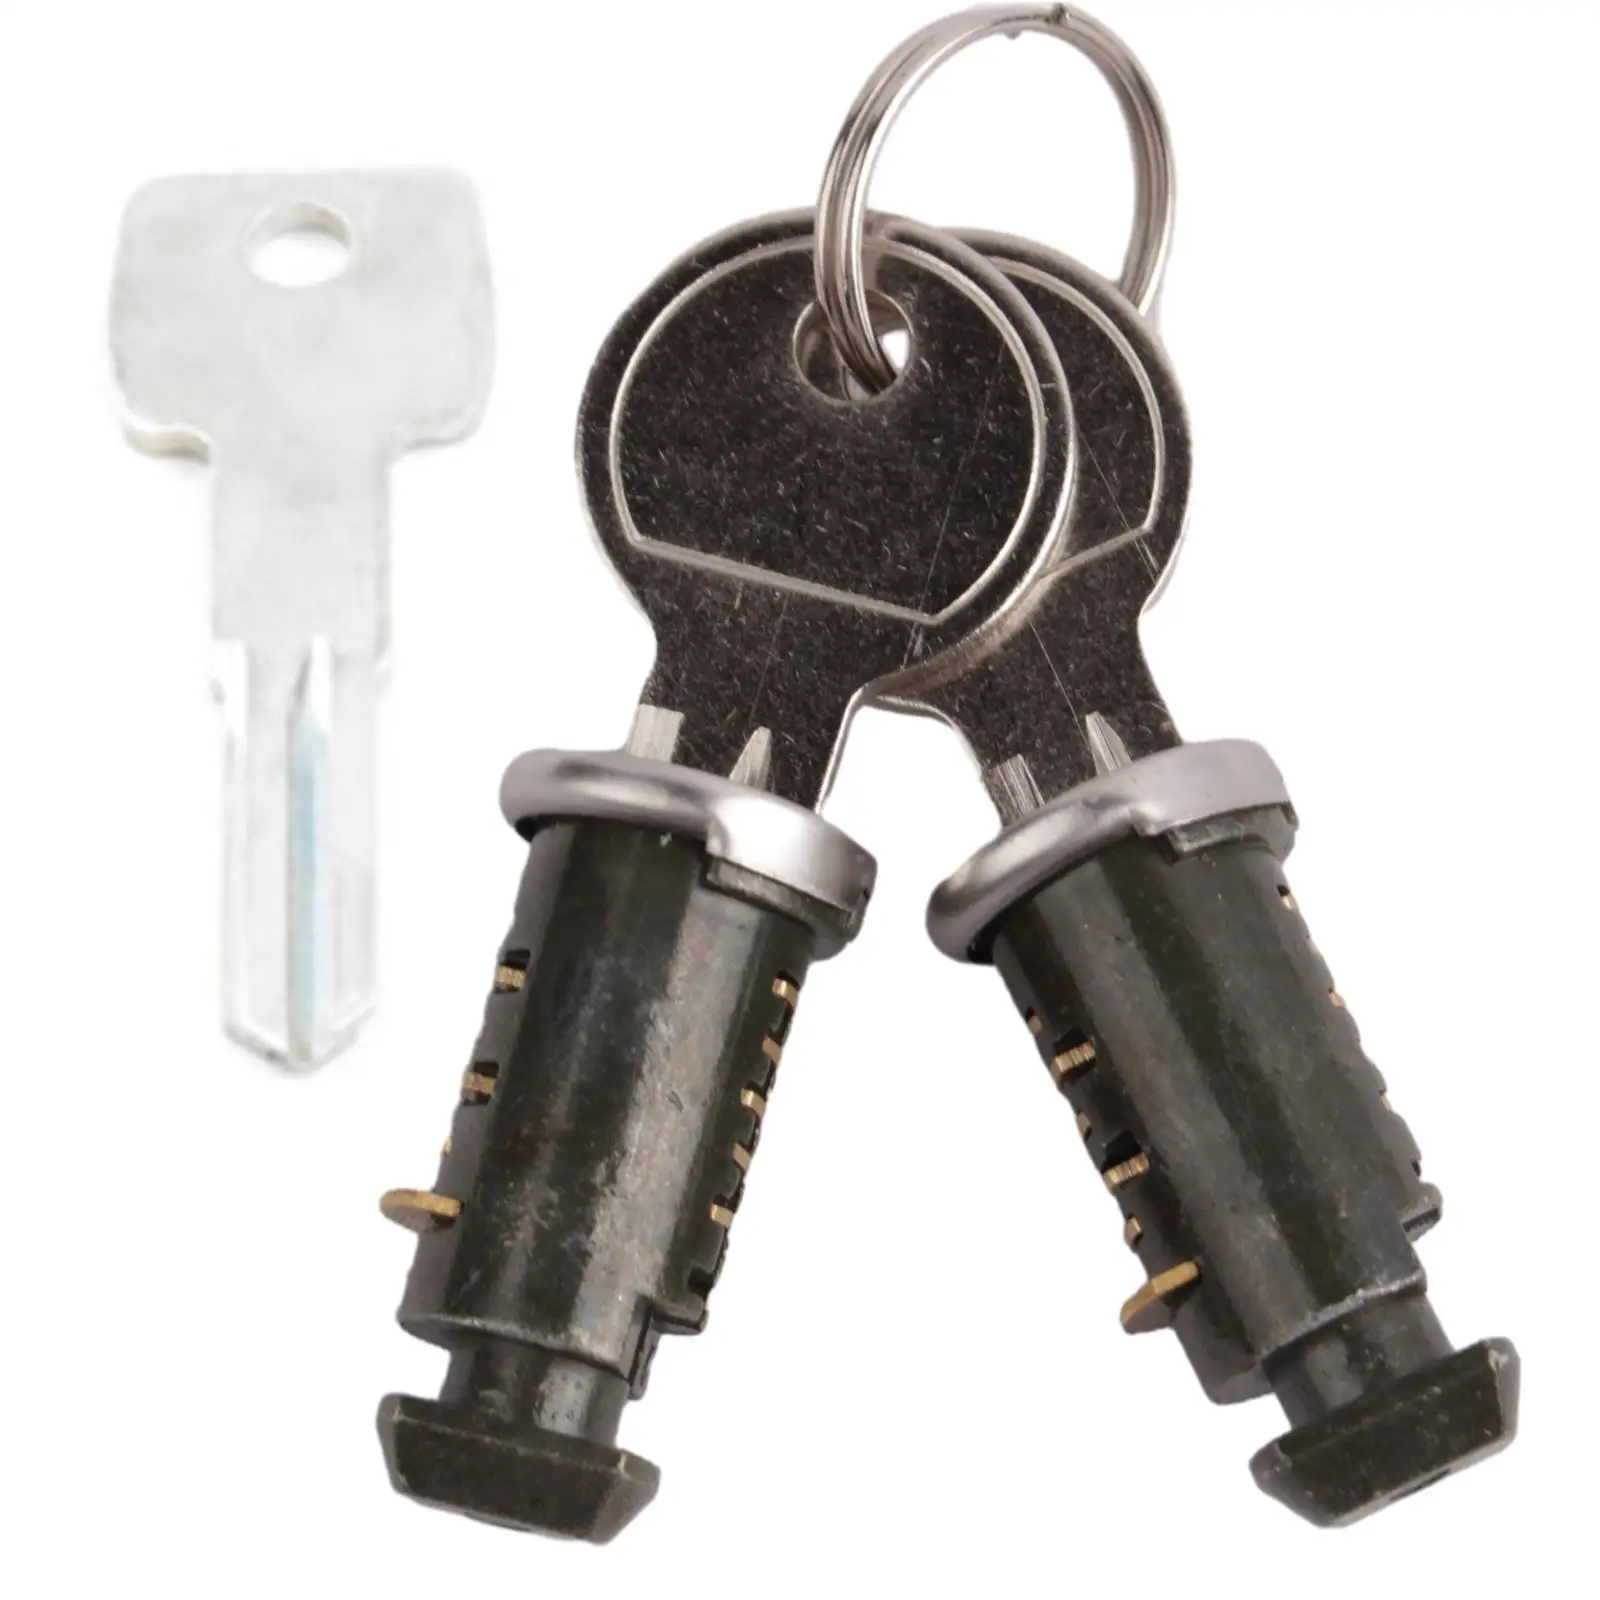 Lock Cylinders for Car Racks System Car Rack Parts Detachable Accessory Cross Bars Locks and Key Kit for SUV Car Rack Locks